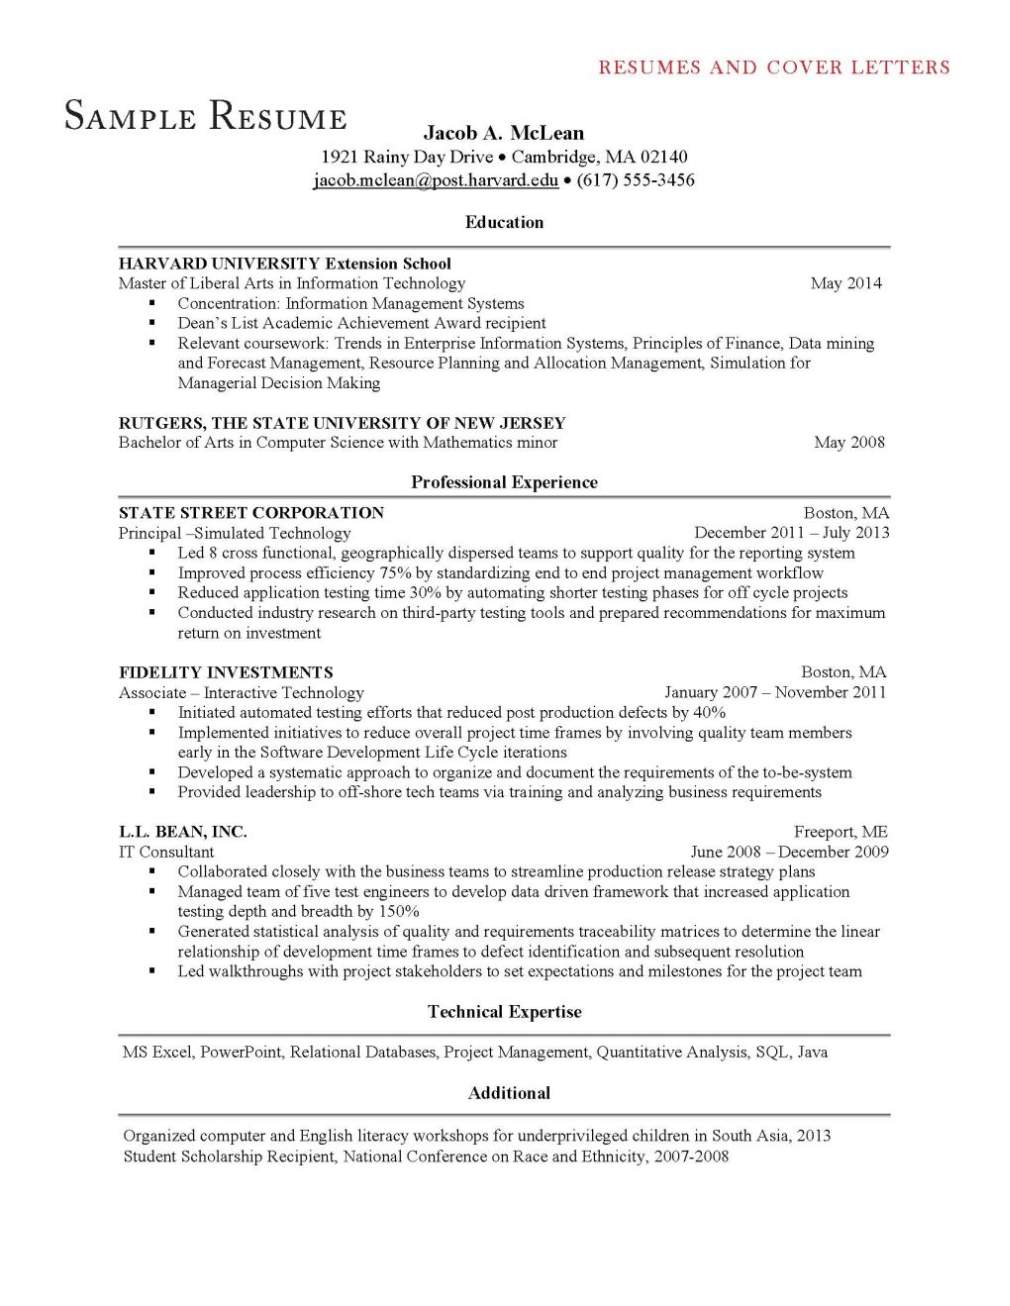 resume-sample-harvard-university-sutajoyoa